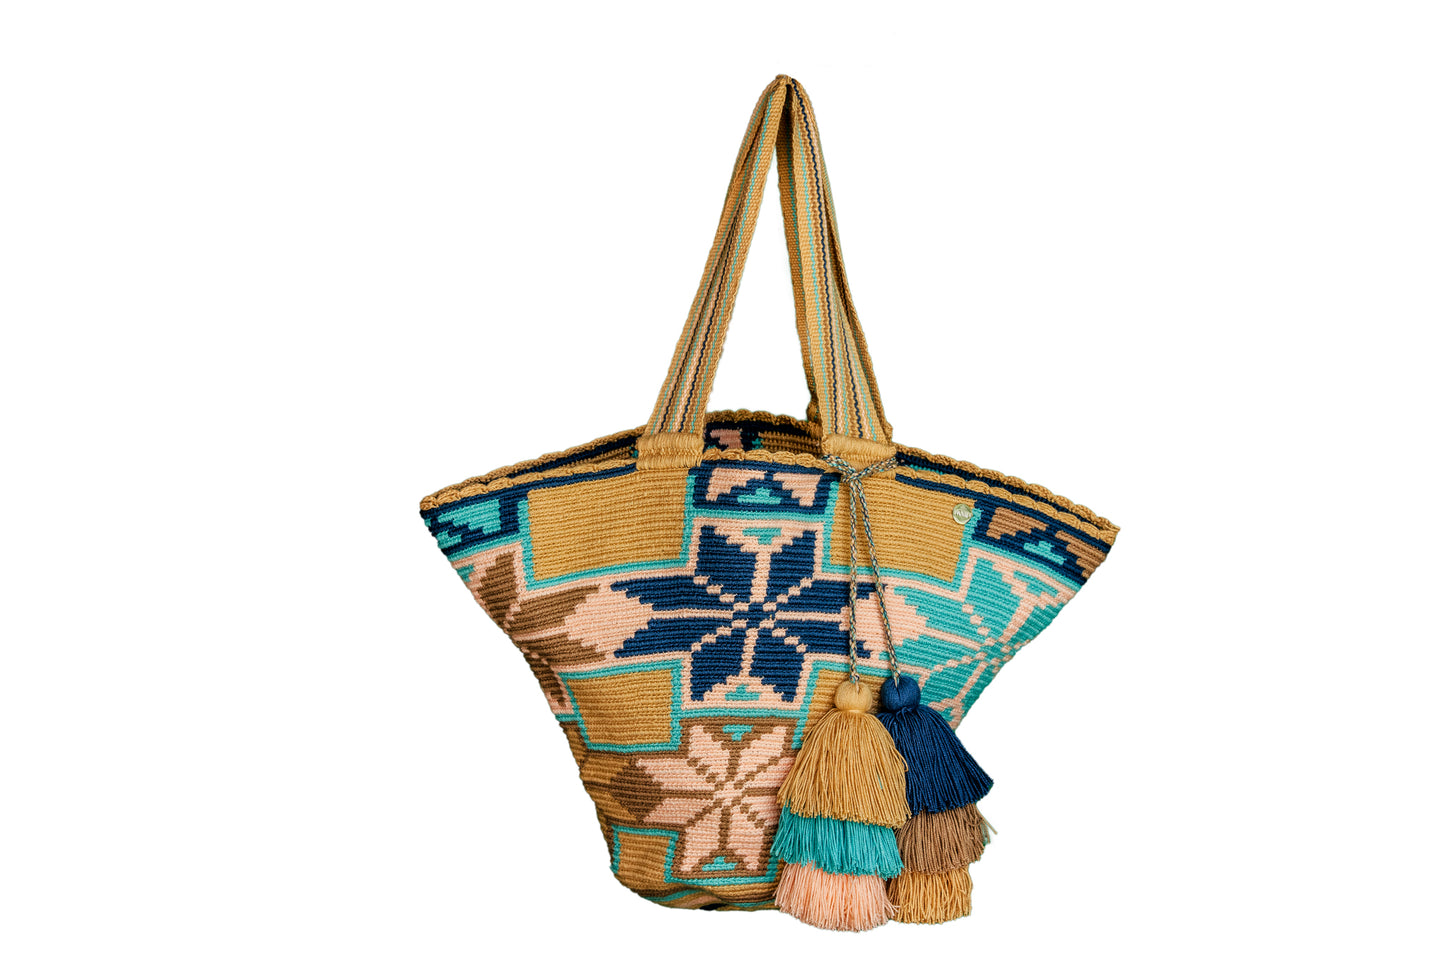 Beach Bag with Star-Shaped Flower Design, the crochet bag also has 6 tassels